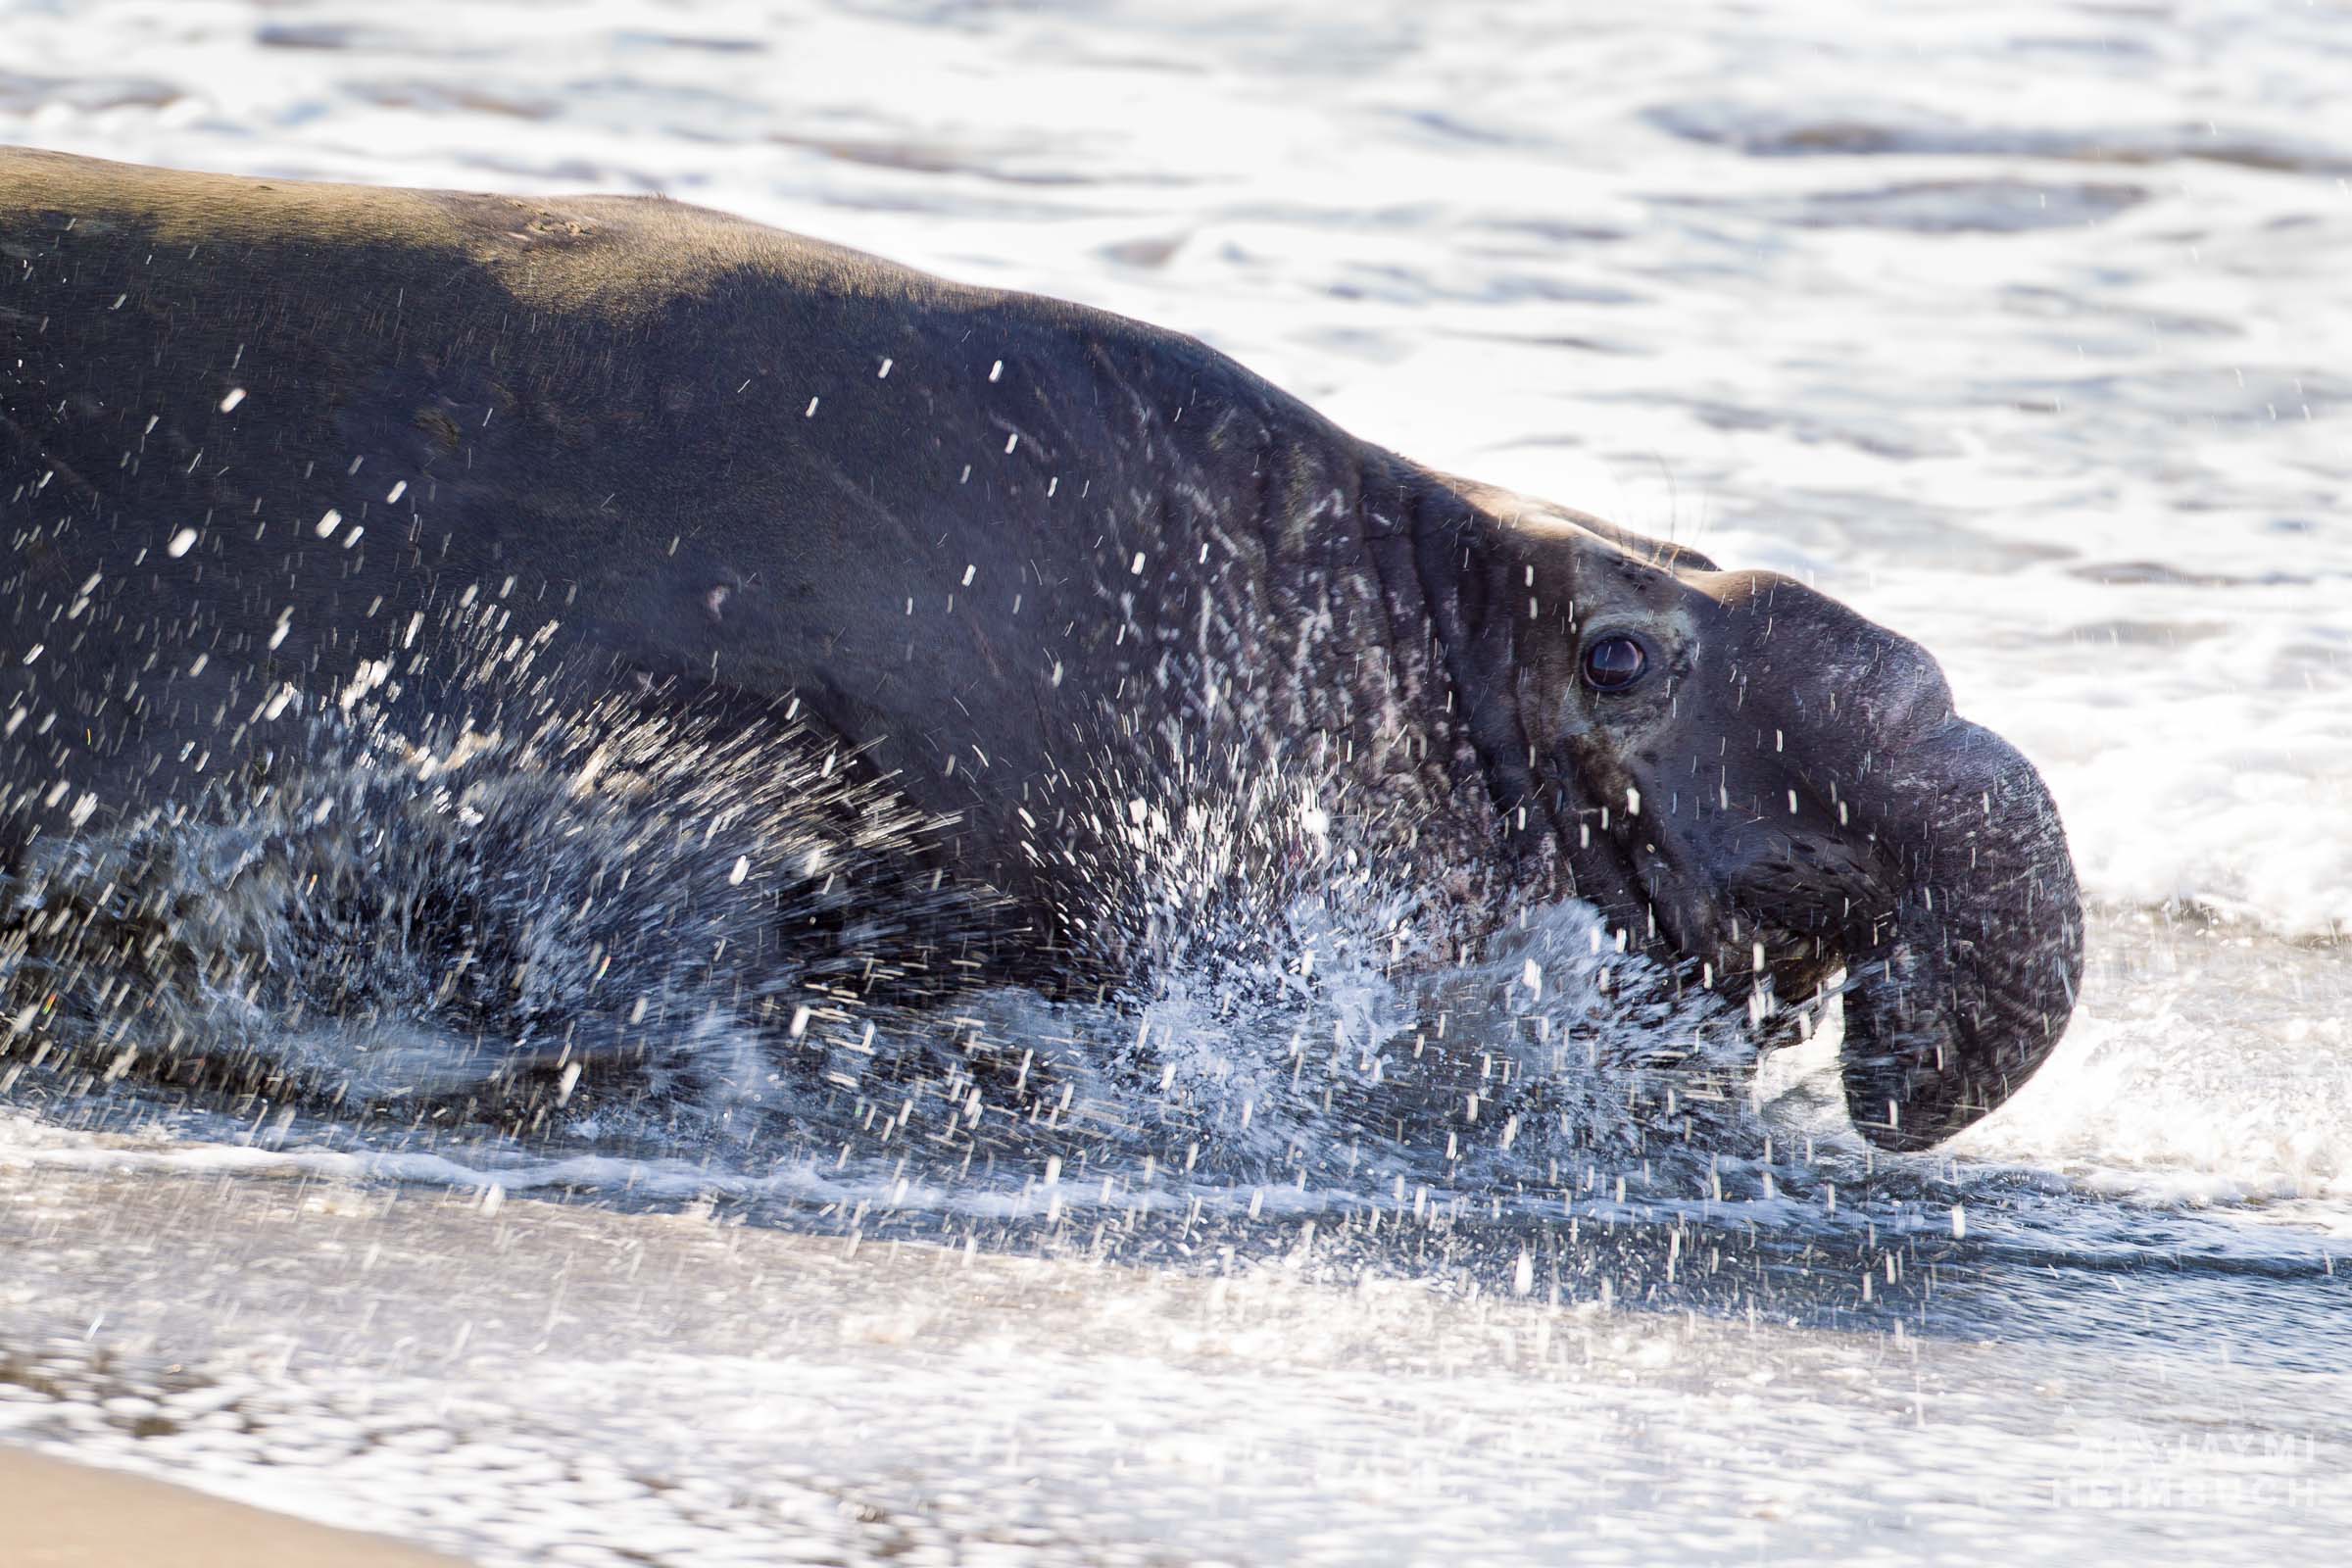 A male northern elephant seal (Mirounga angustirostris) retreats into the ocean